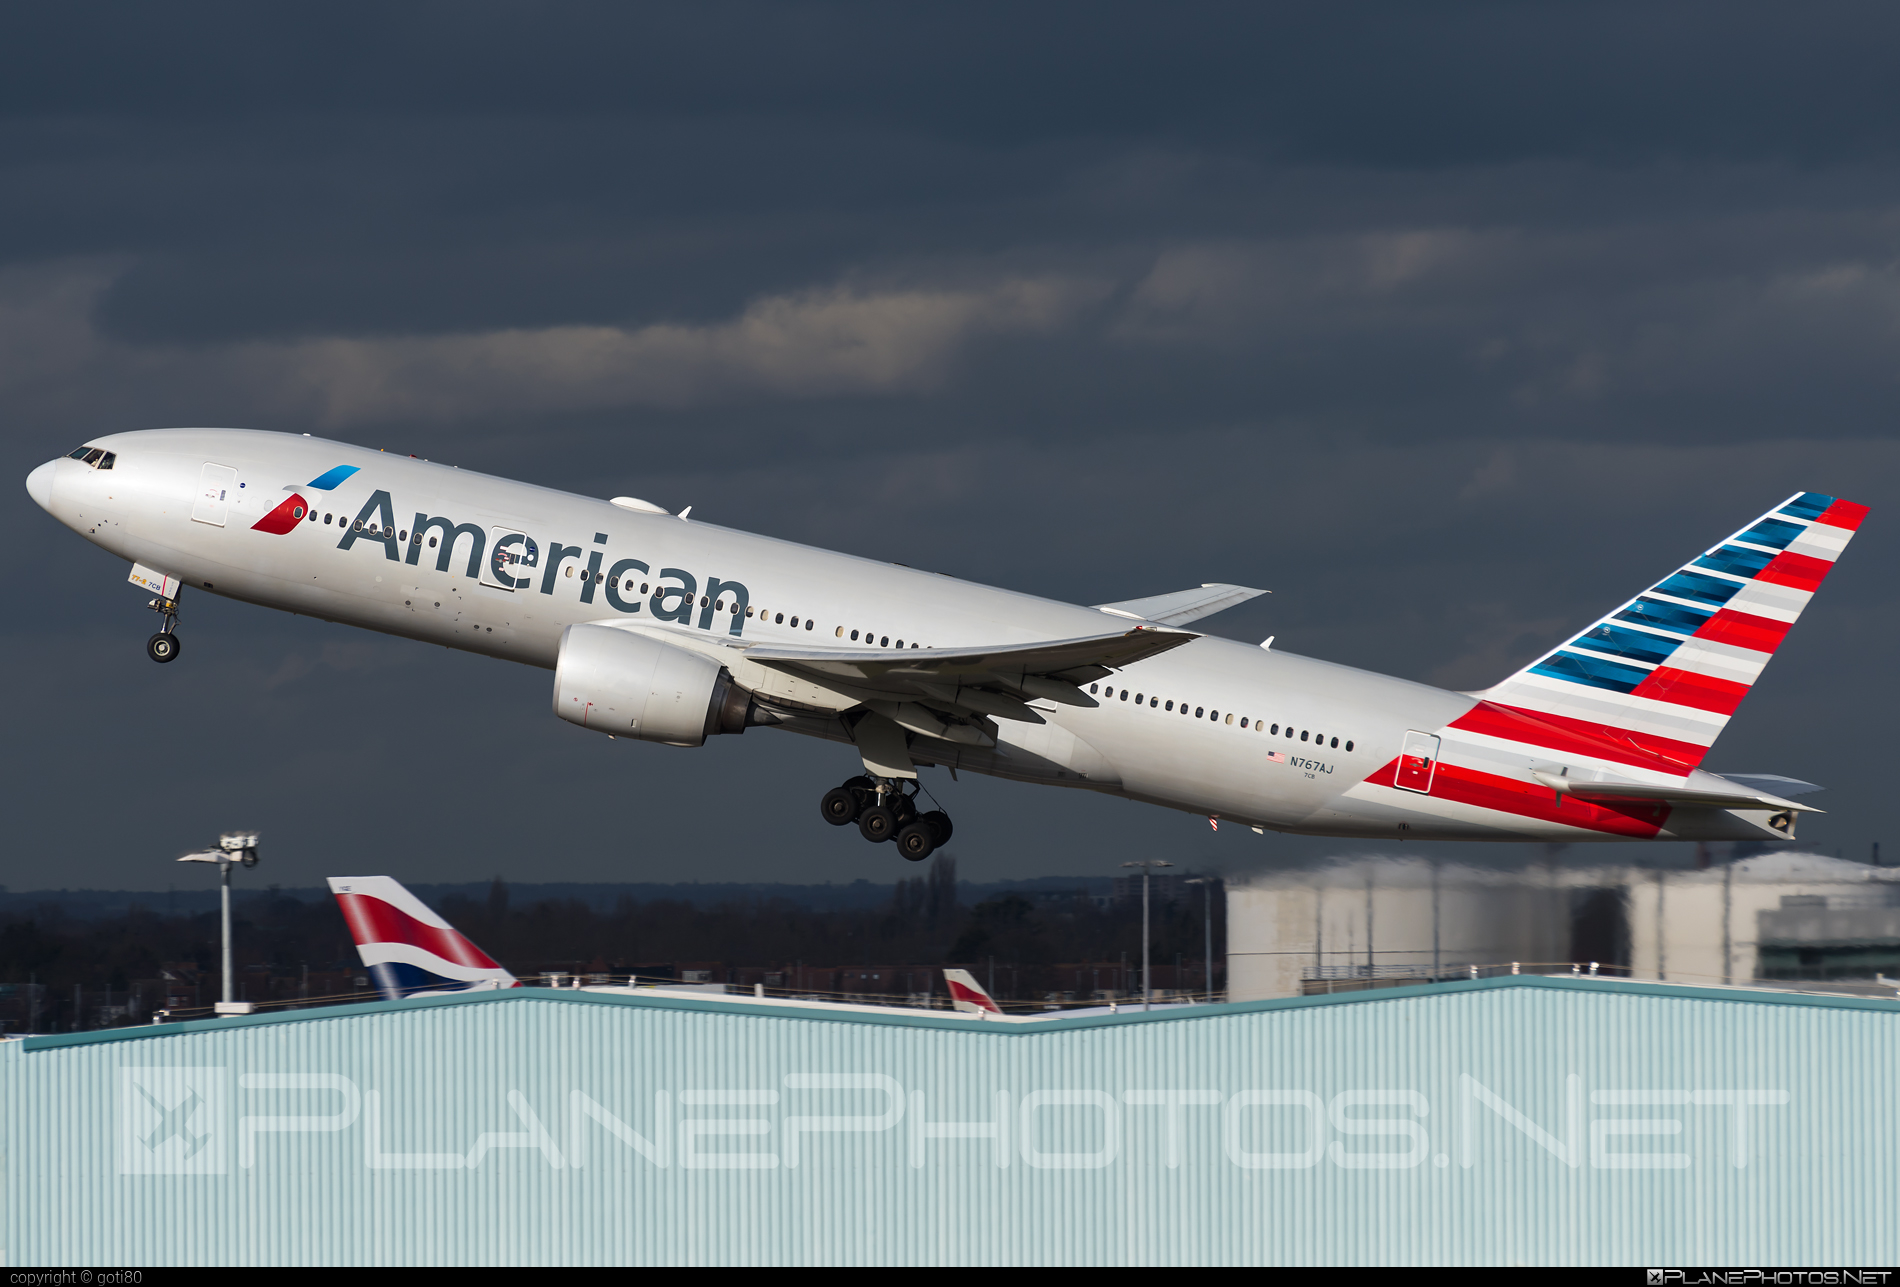 Boeing 777-200ER - N767AJ operated by American Airlines #americanairlines #b777 #b777er #boeing #boeing777 #tripleseven